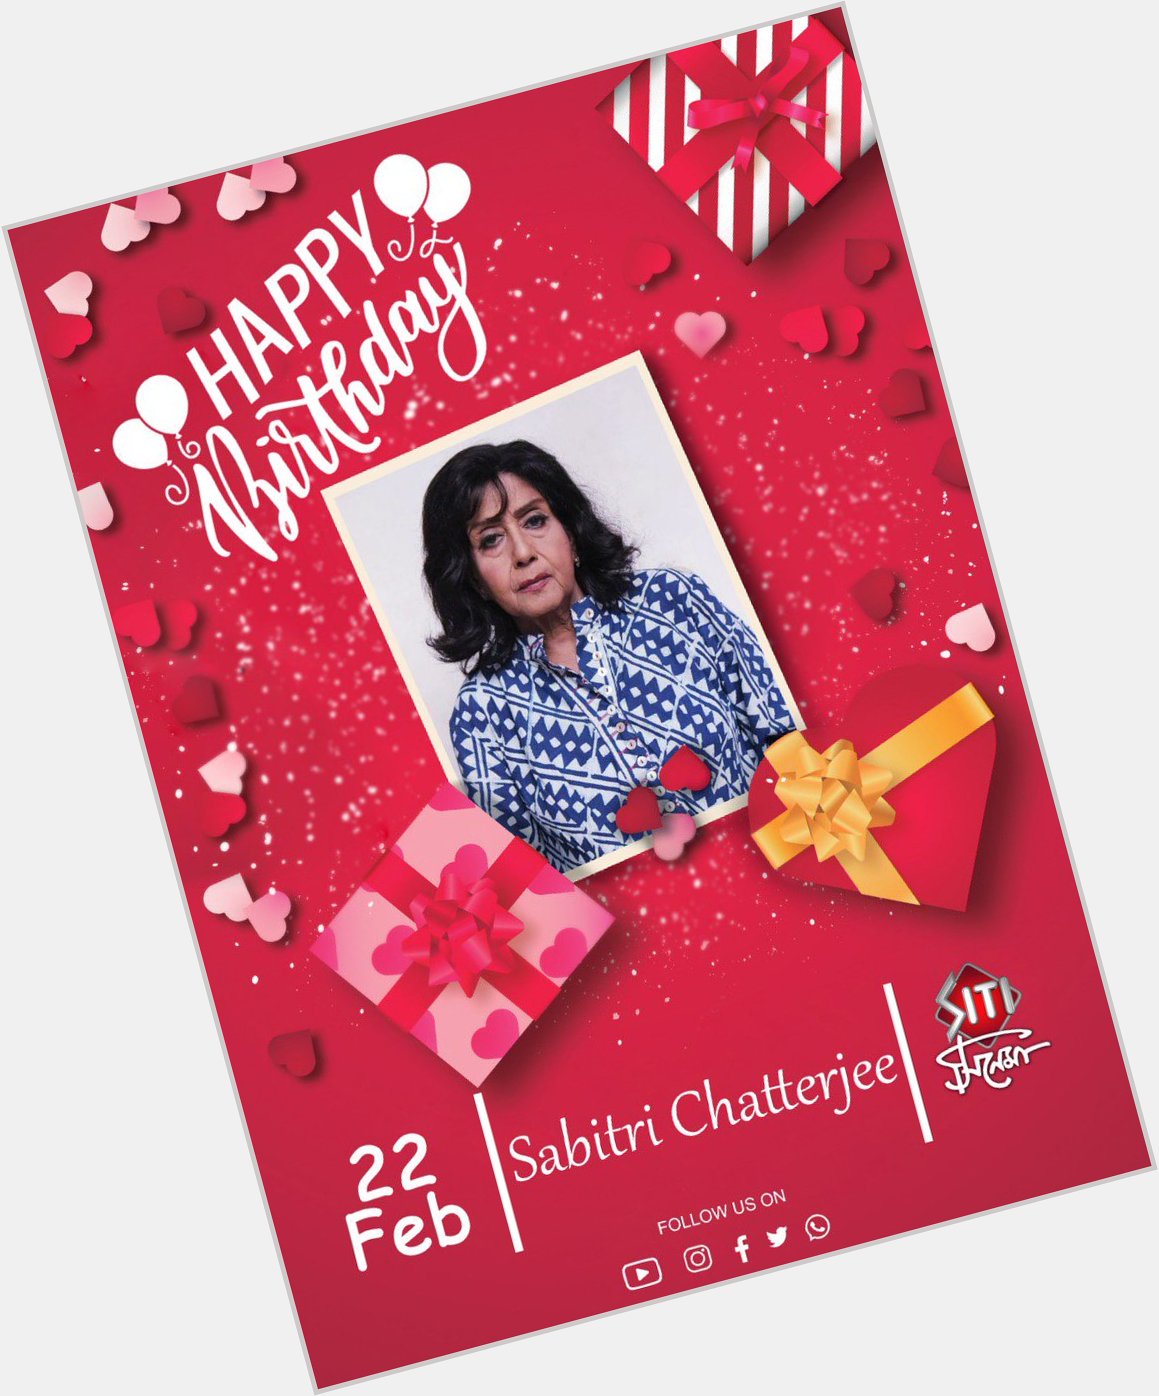 Siti cinema wishes Sabitri Chatterjee a very Happy Birthday           | | 